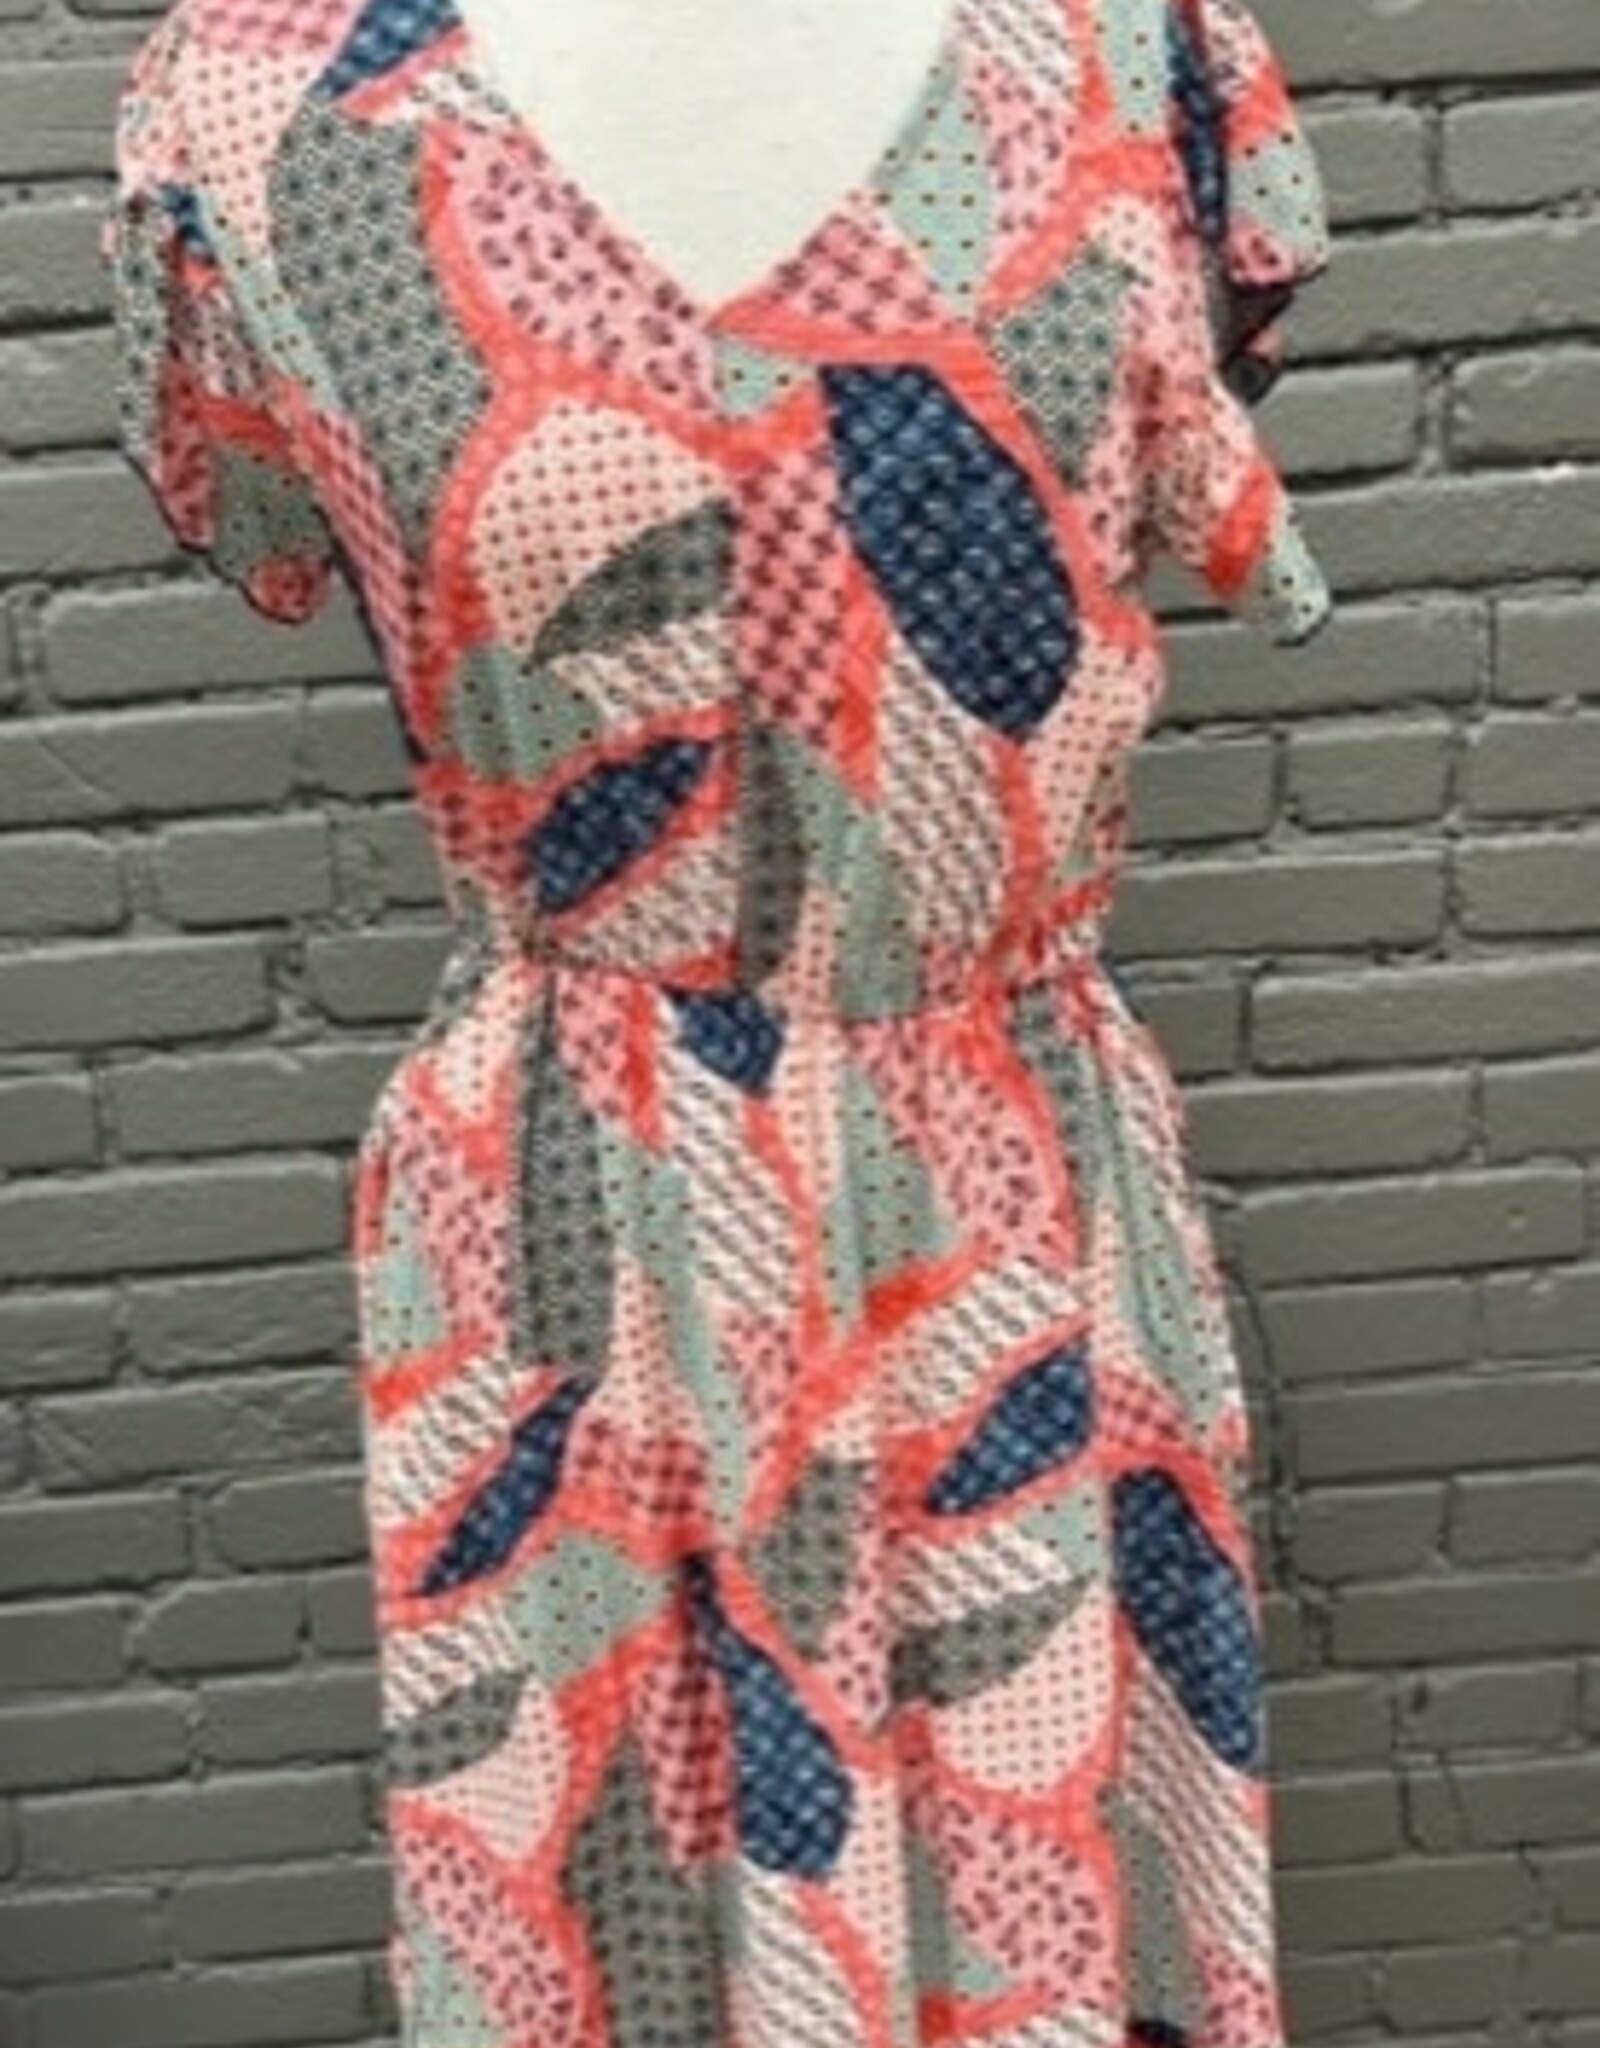 Dress Maya Printed Ruffle Midi Dress